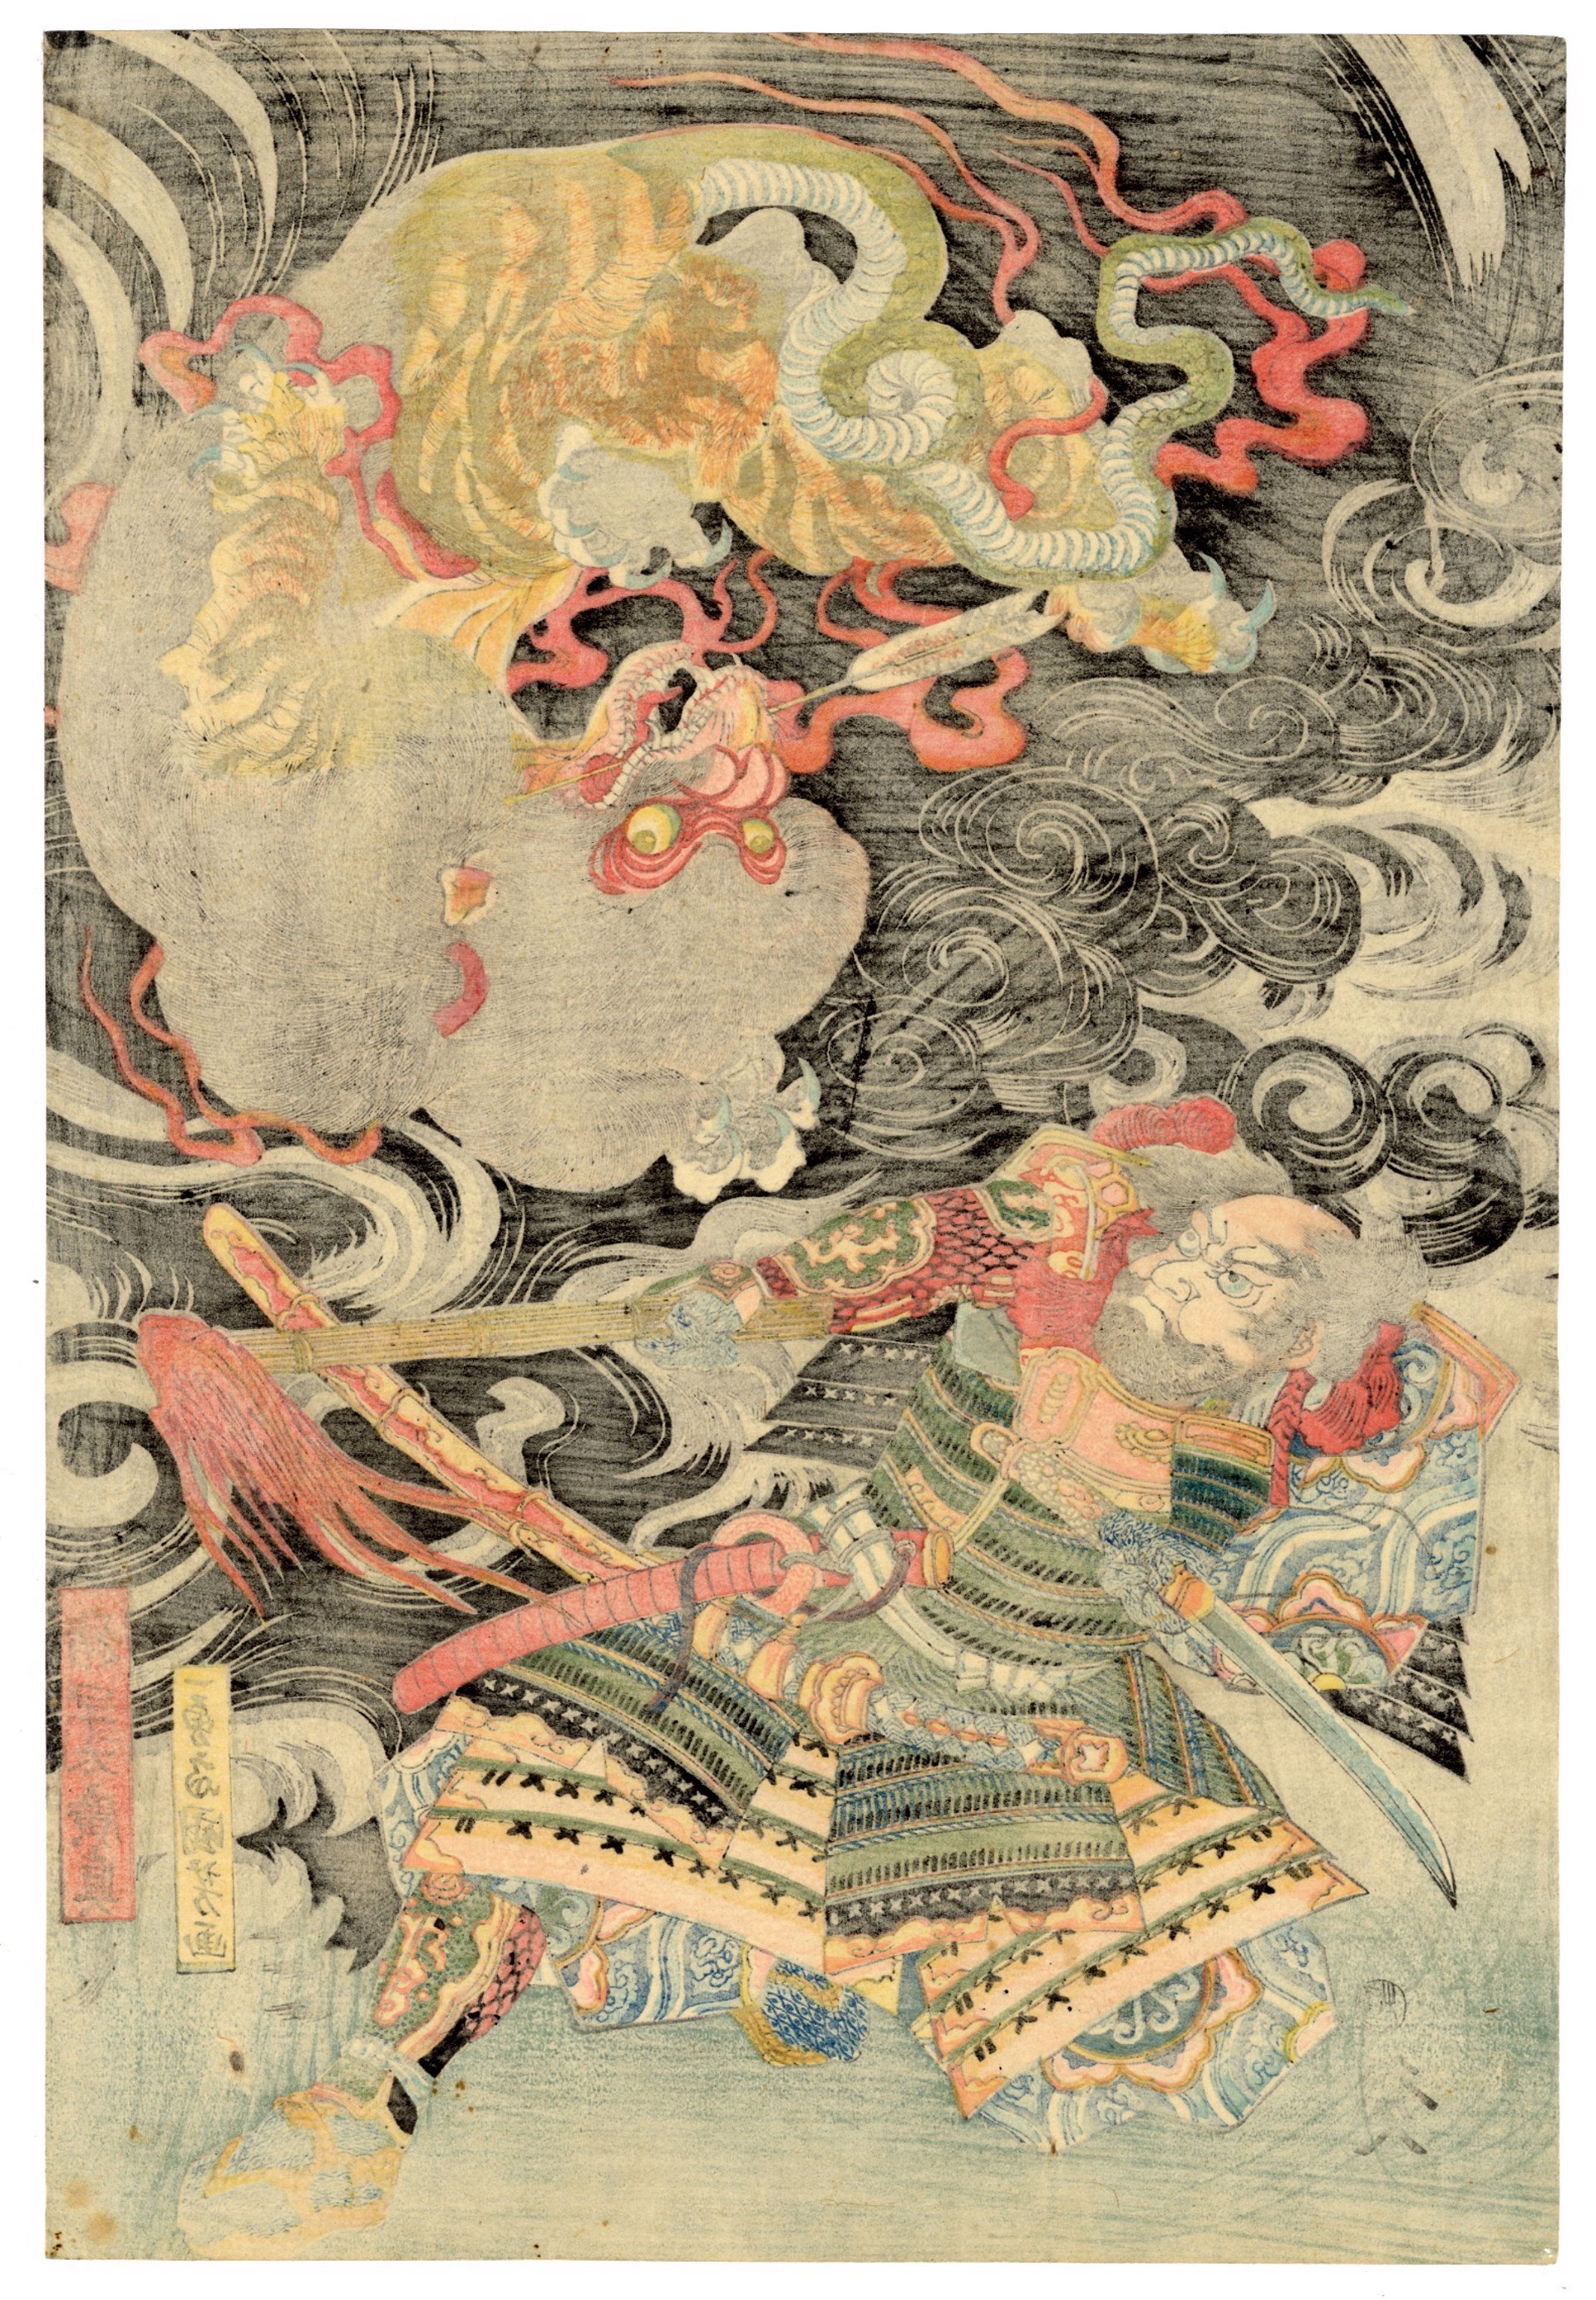 The Nue, in a swirling Black Cloud, is Shot Down by Gen Sammi Yorimasa by Kuniyoshi